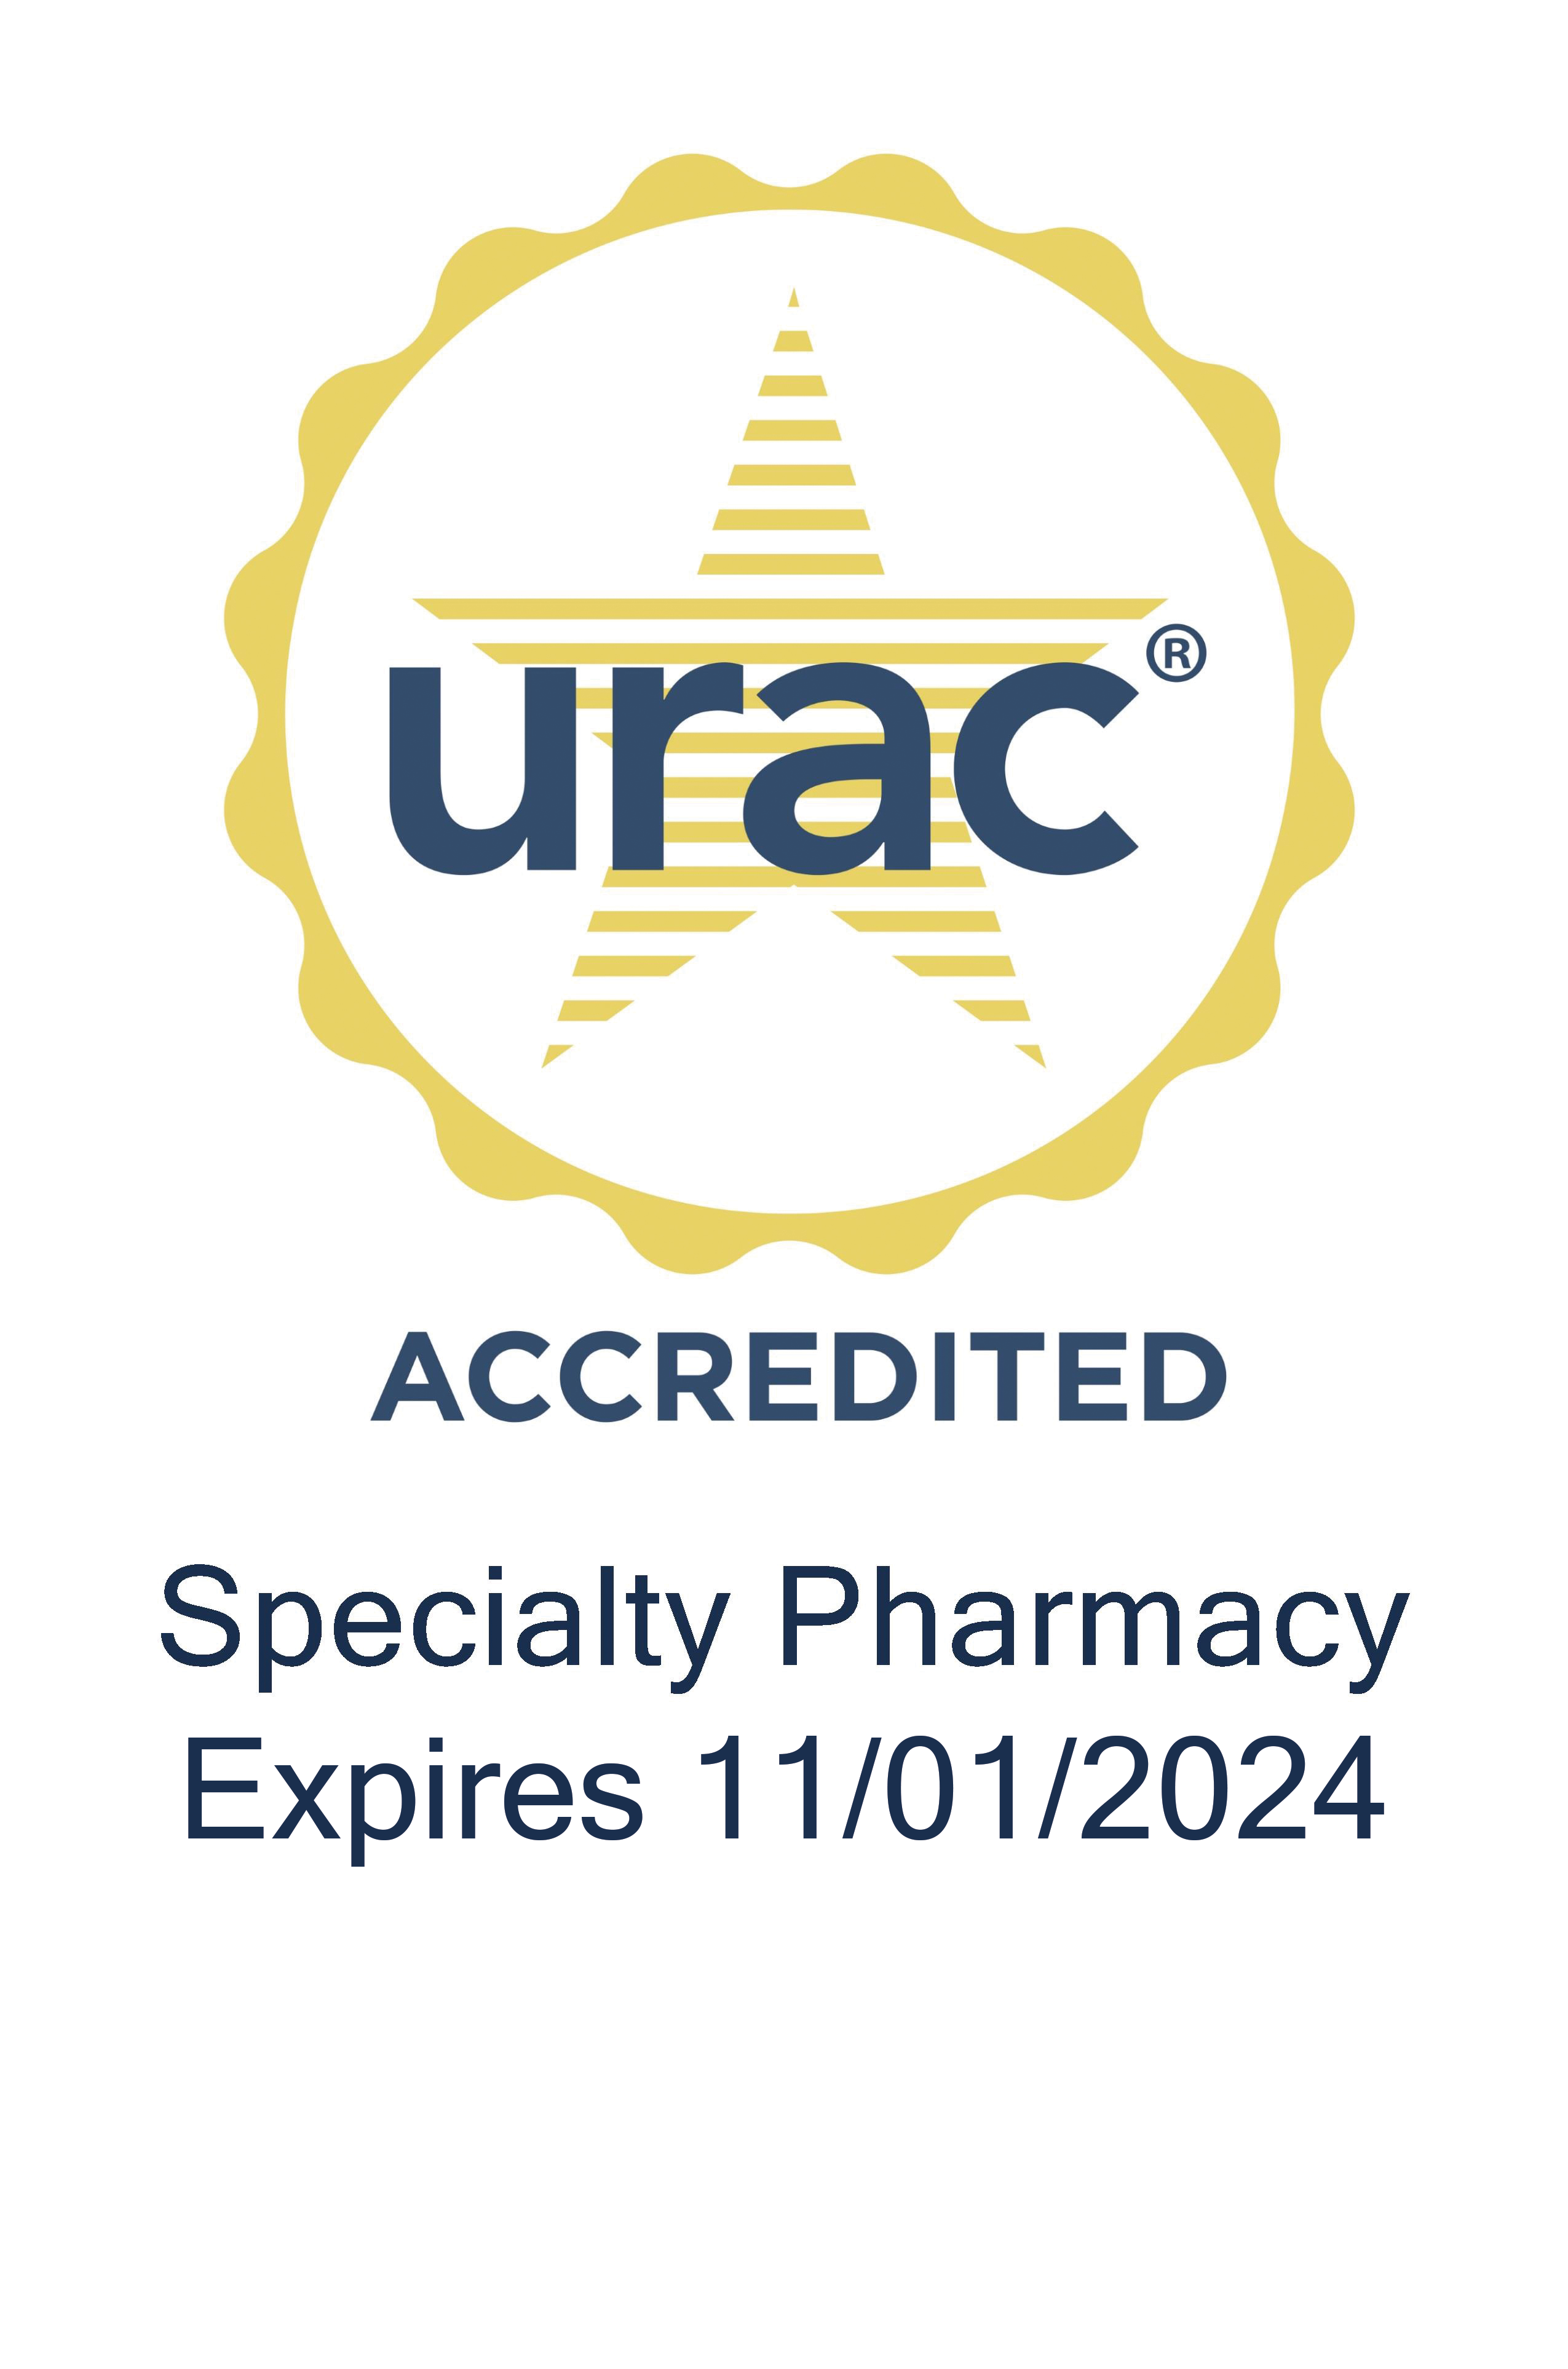 URAC Specialty Pharmacy Accreditation Seal